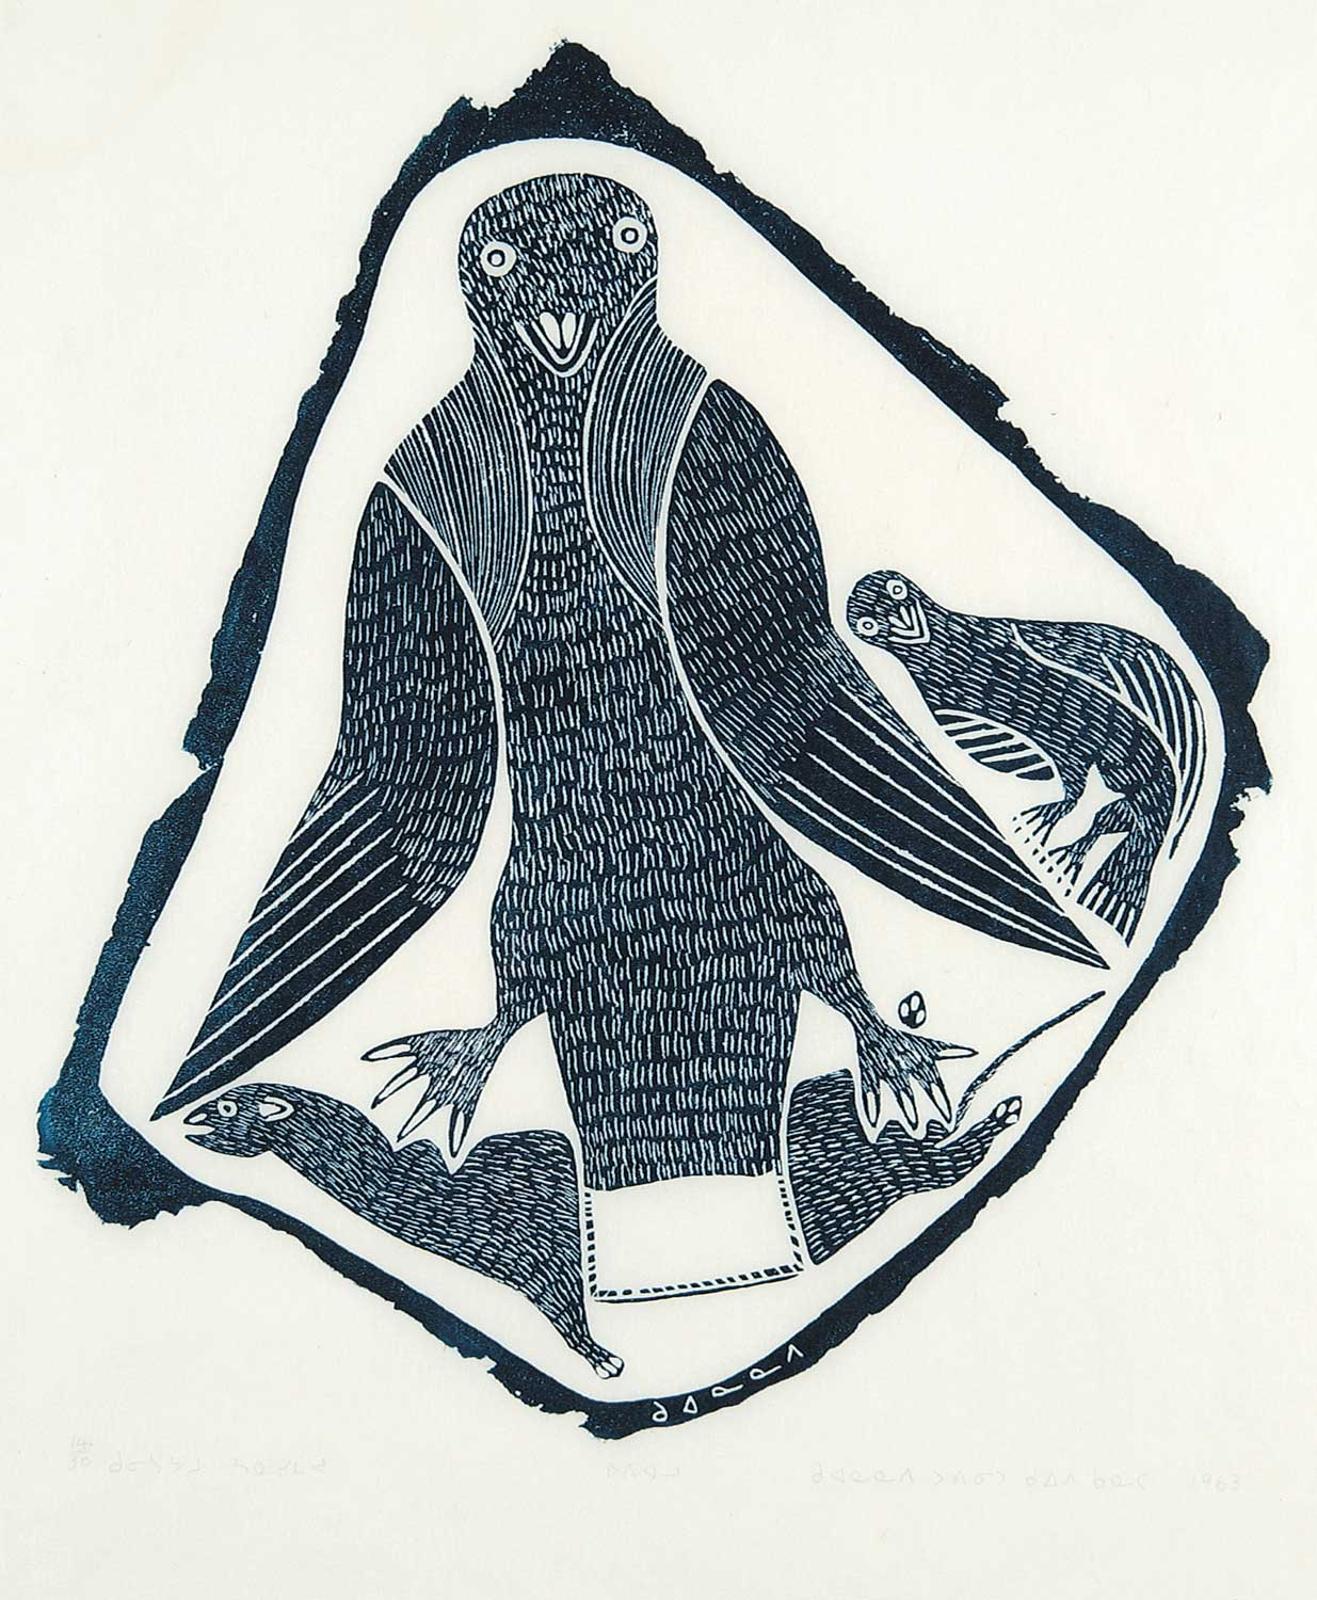 Kuanana - Untitled - Bird with Weasel  #14/30